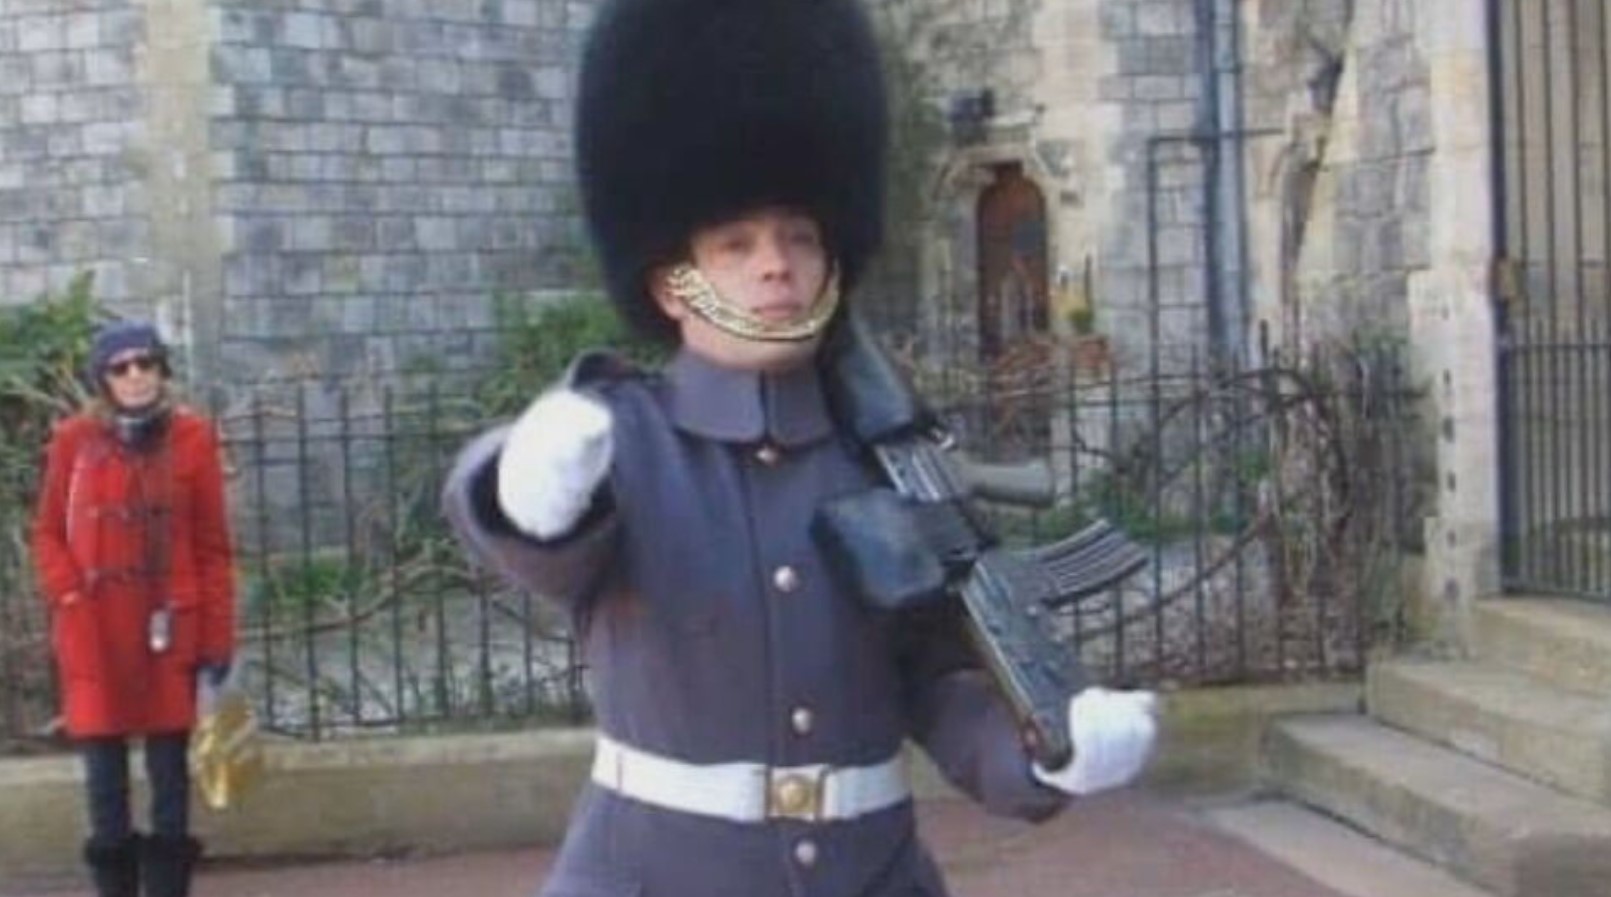 Paul guarding Buckingham Palace aged 30